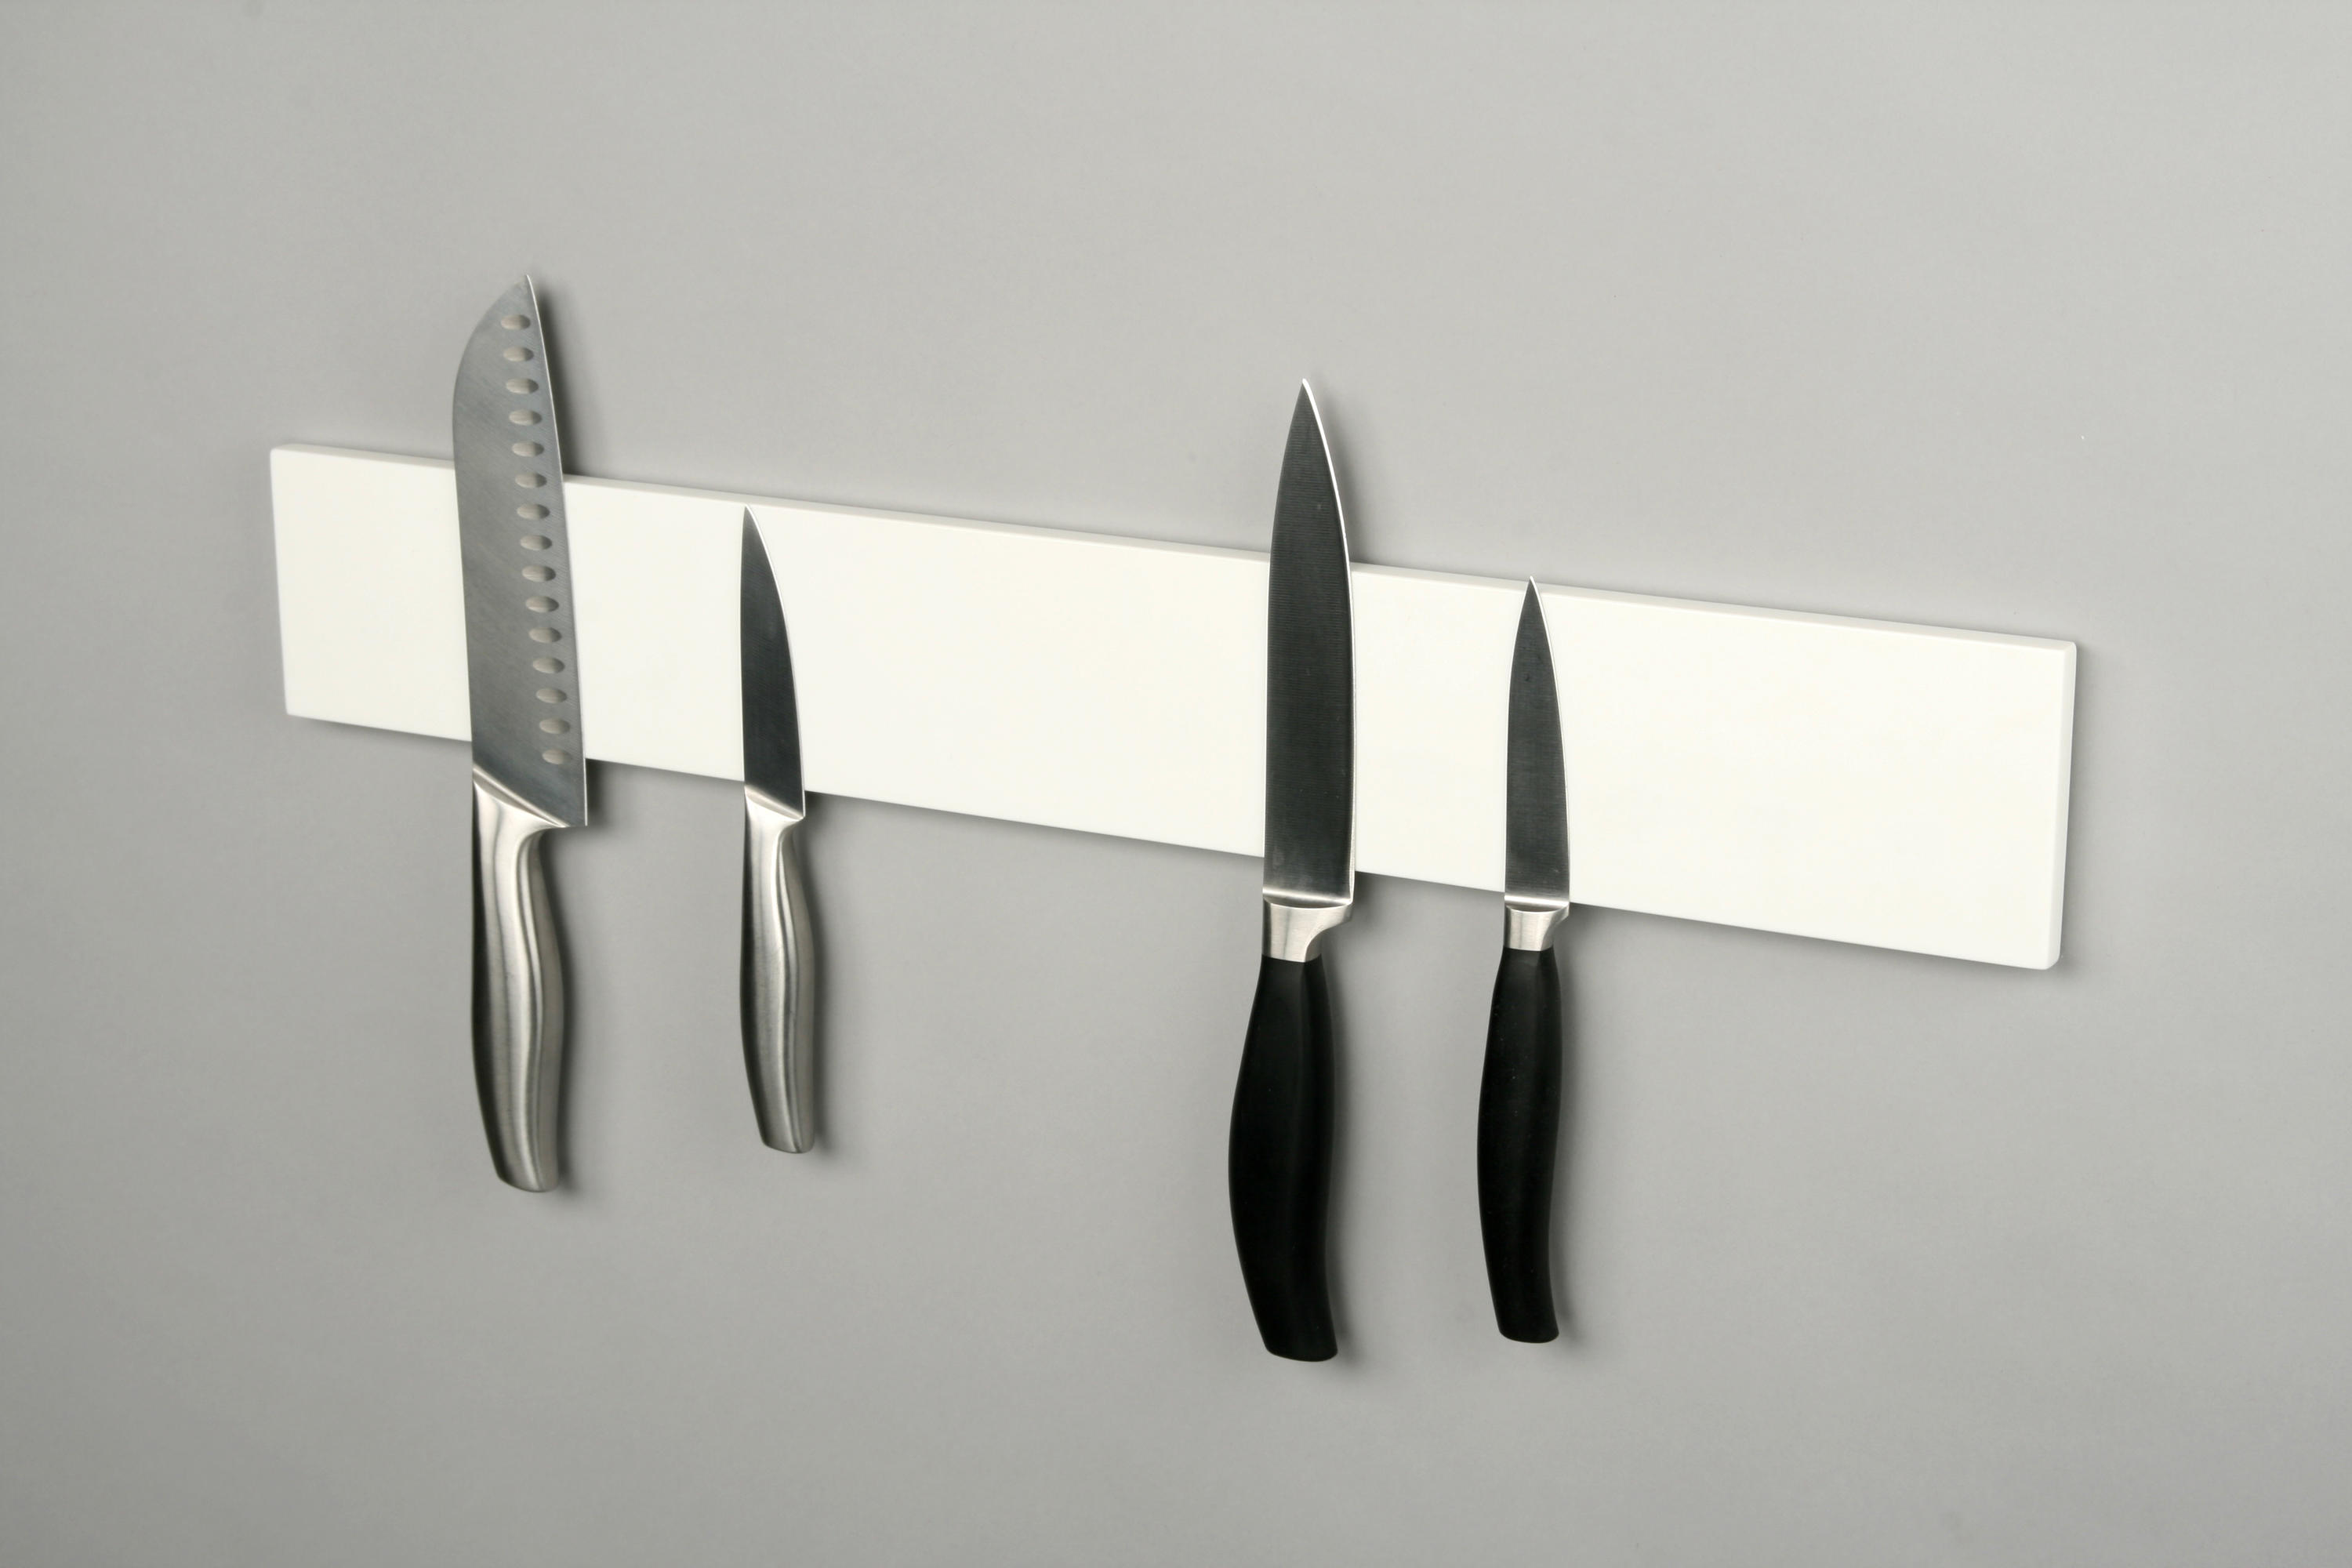 Rund Har råd til Harmoni STRAIGHTS knife magnet & designer furniture | Architonic